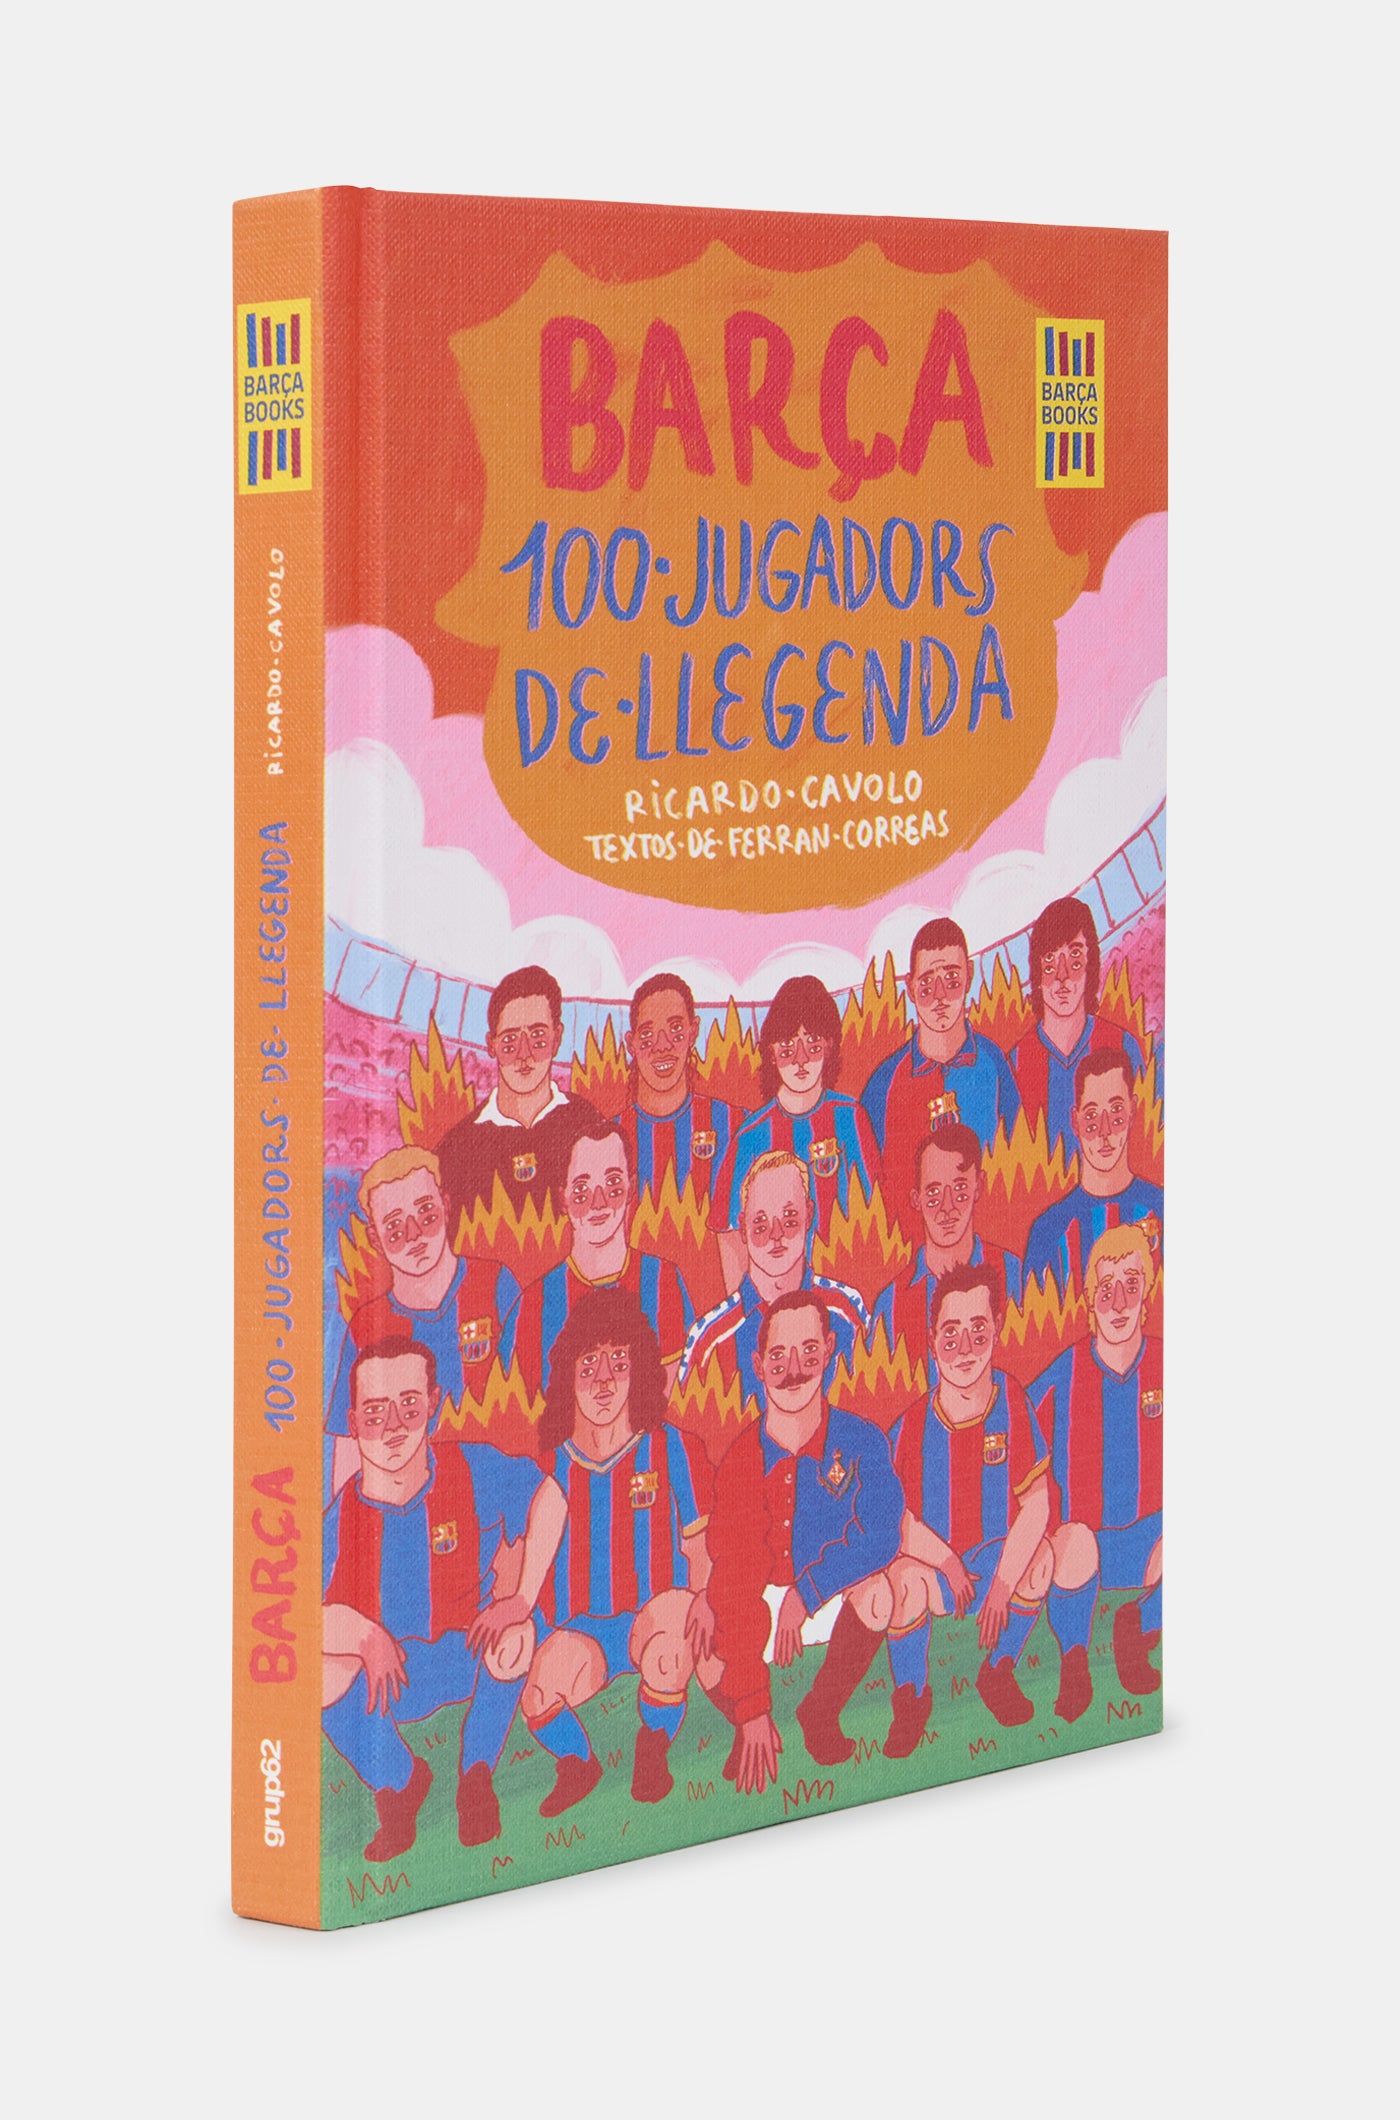 Livre "Barça. 100 jugadores de leyenda"